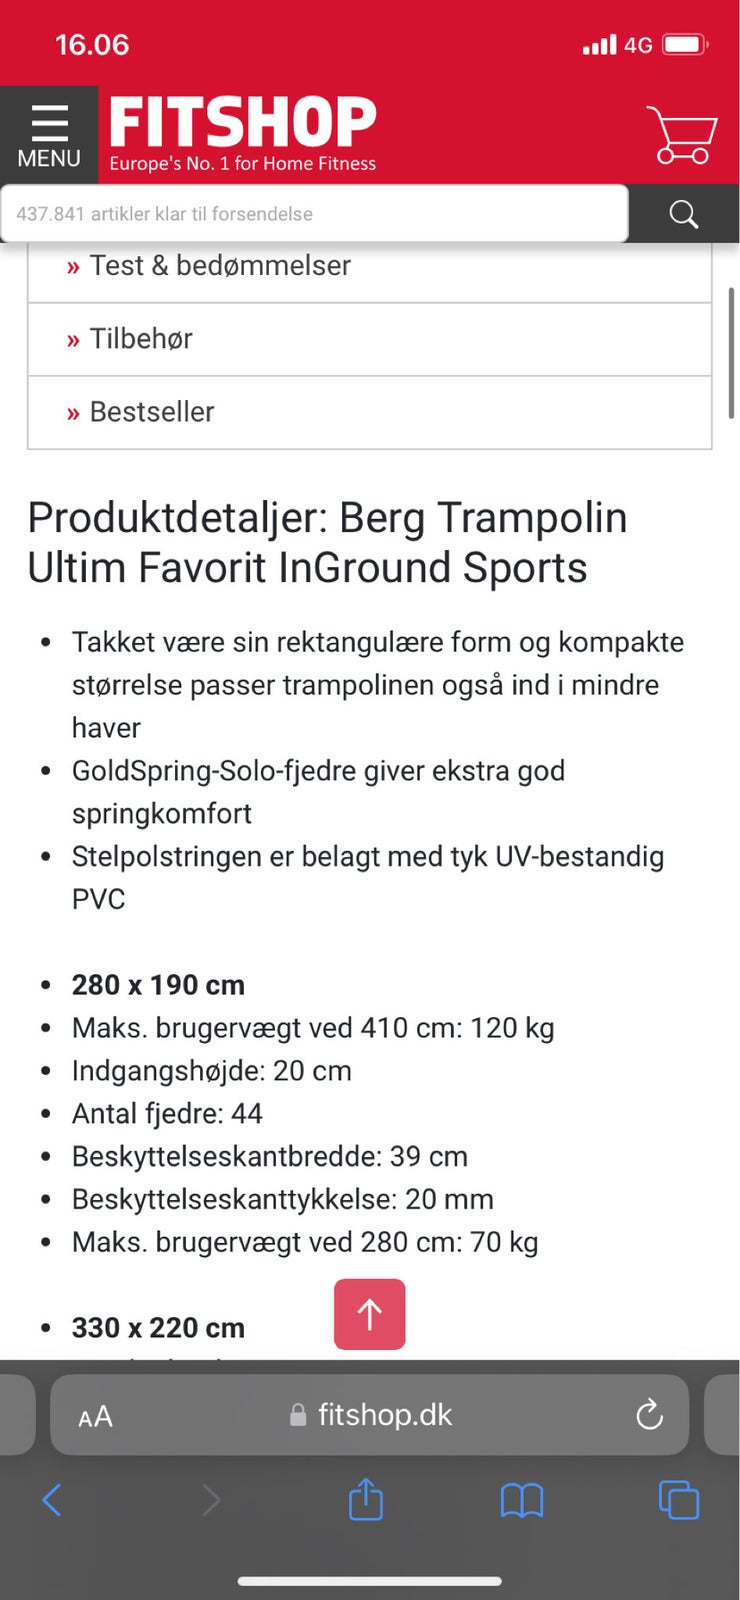 Trampolin, Berg trampolin ultim favorit sports inground